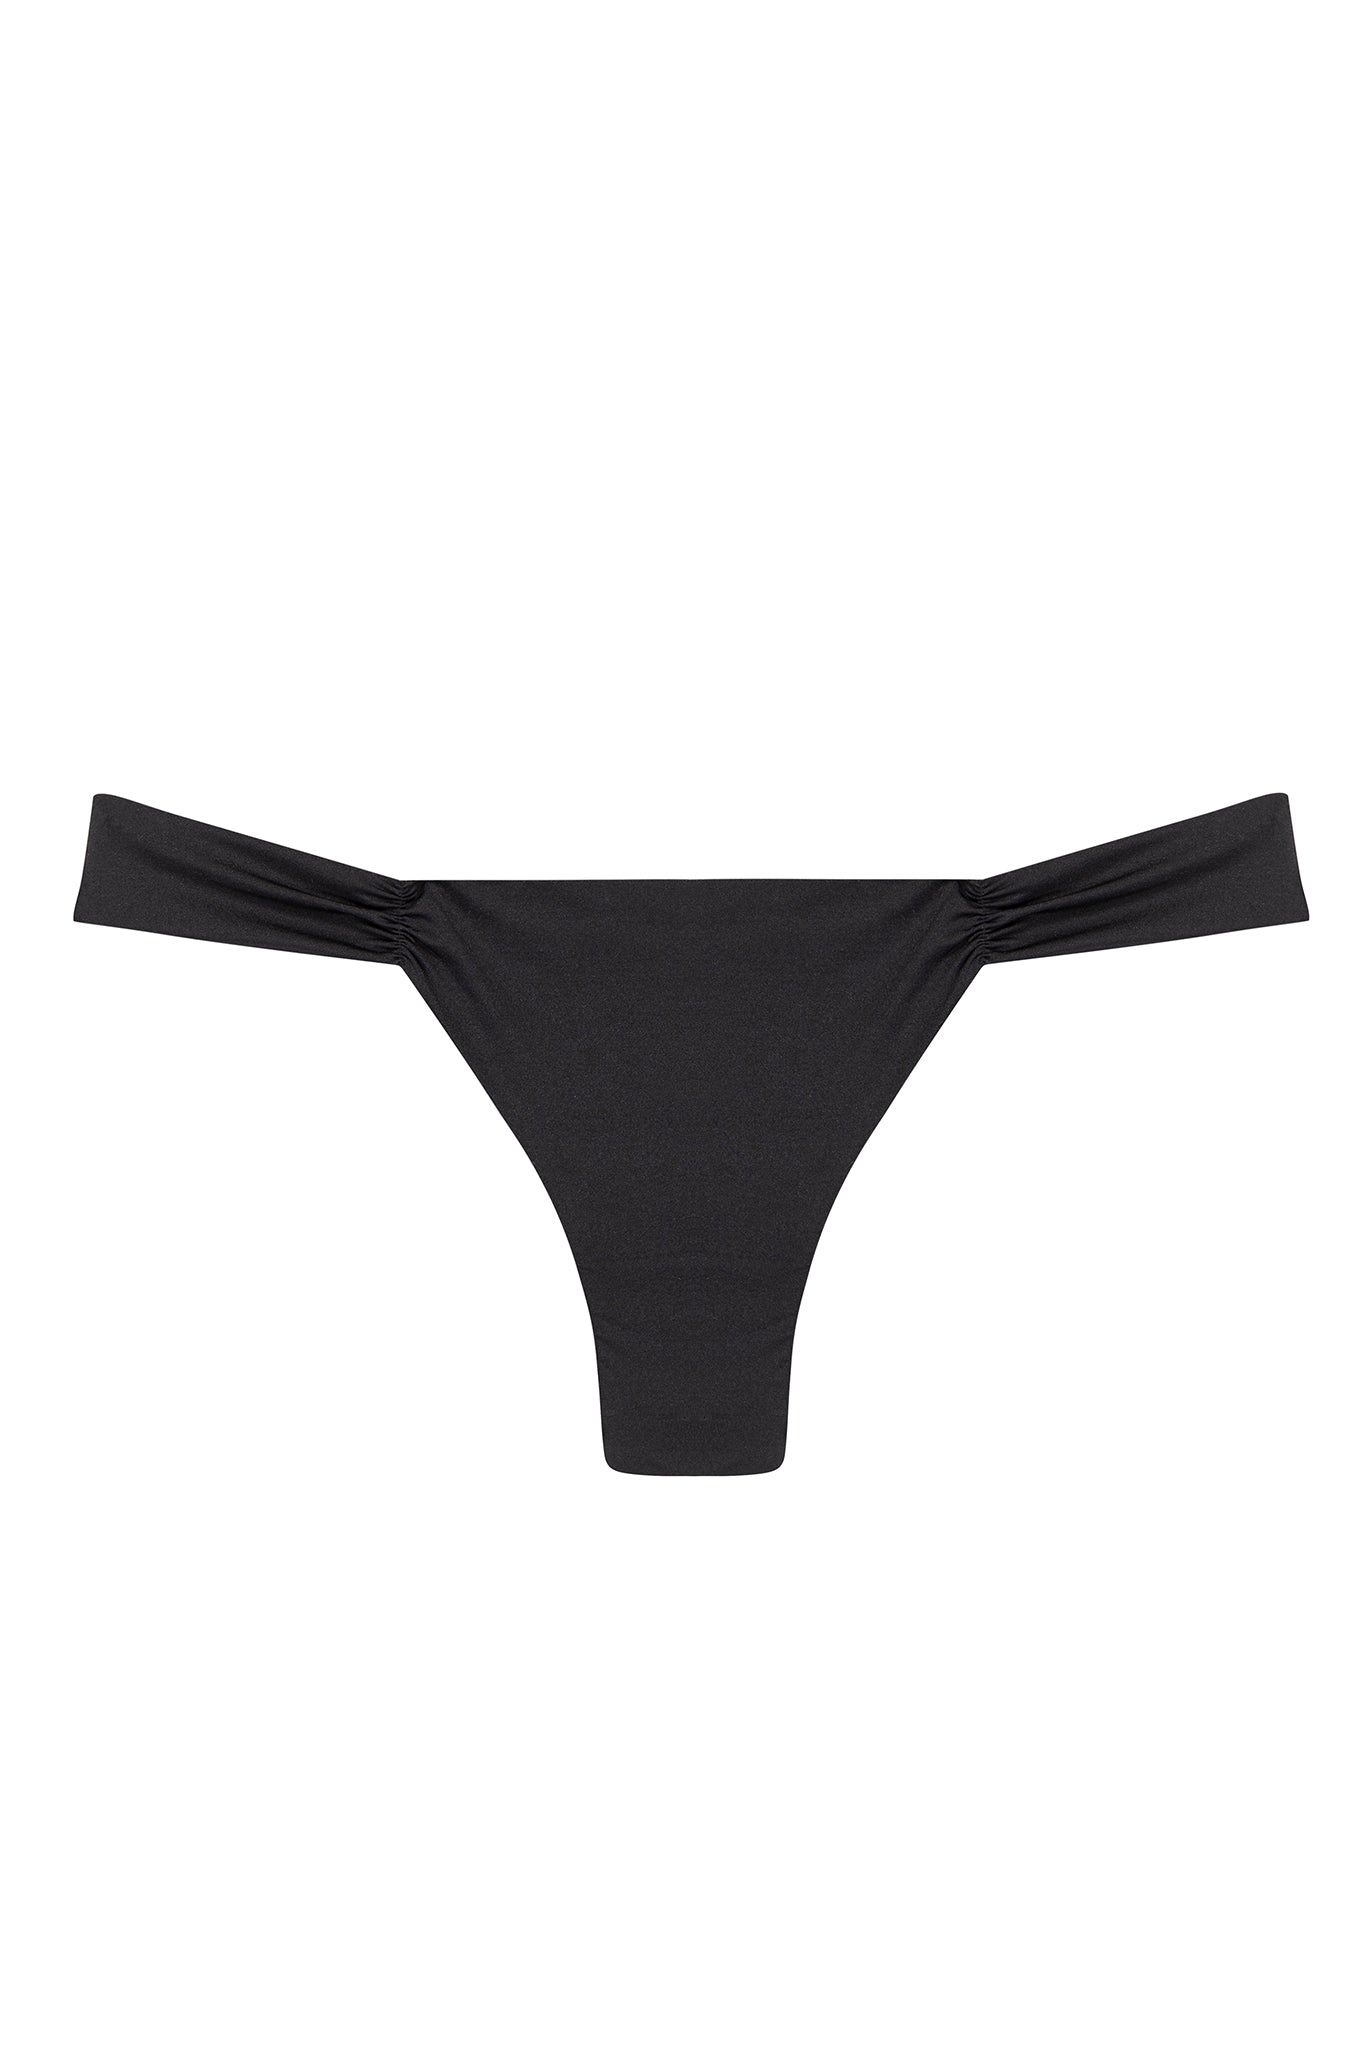 Clovelly Bottom - Black – Monday Swimwear